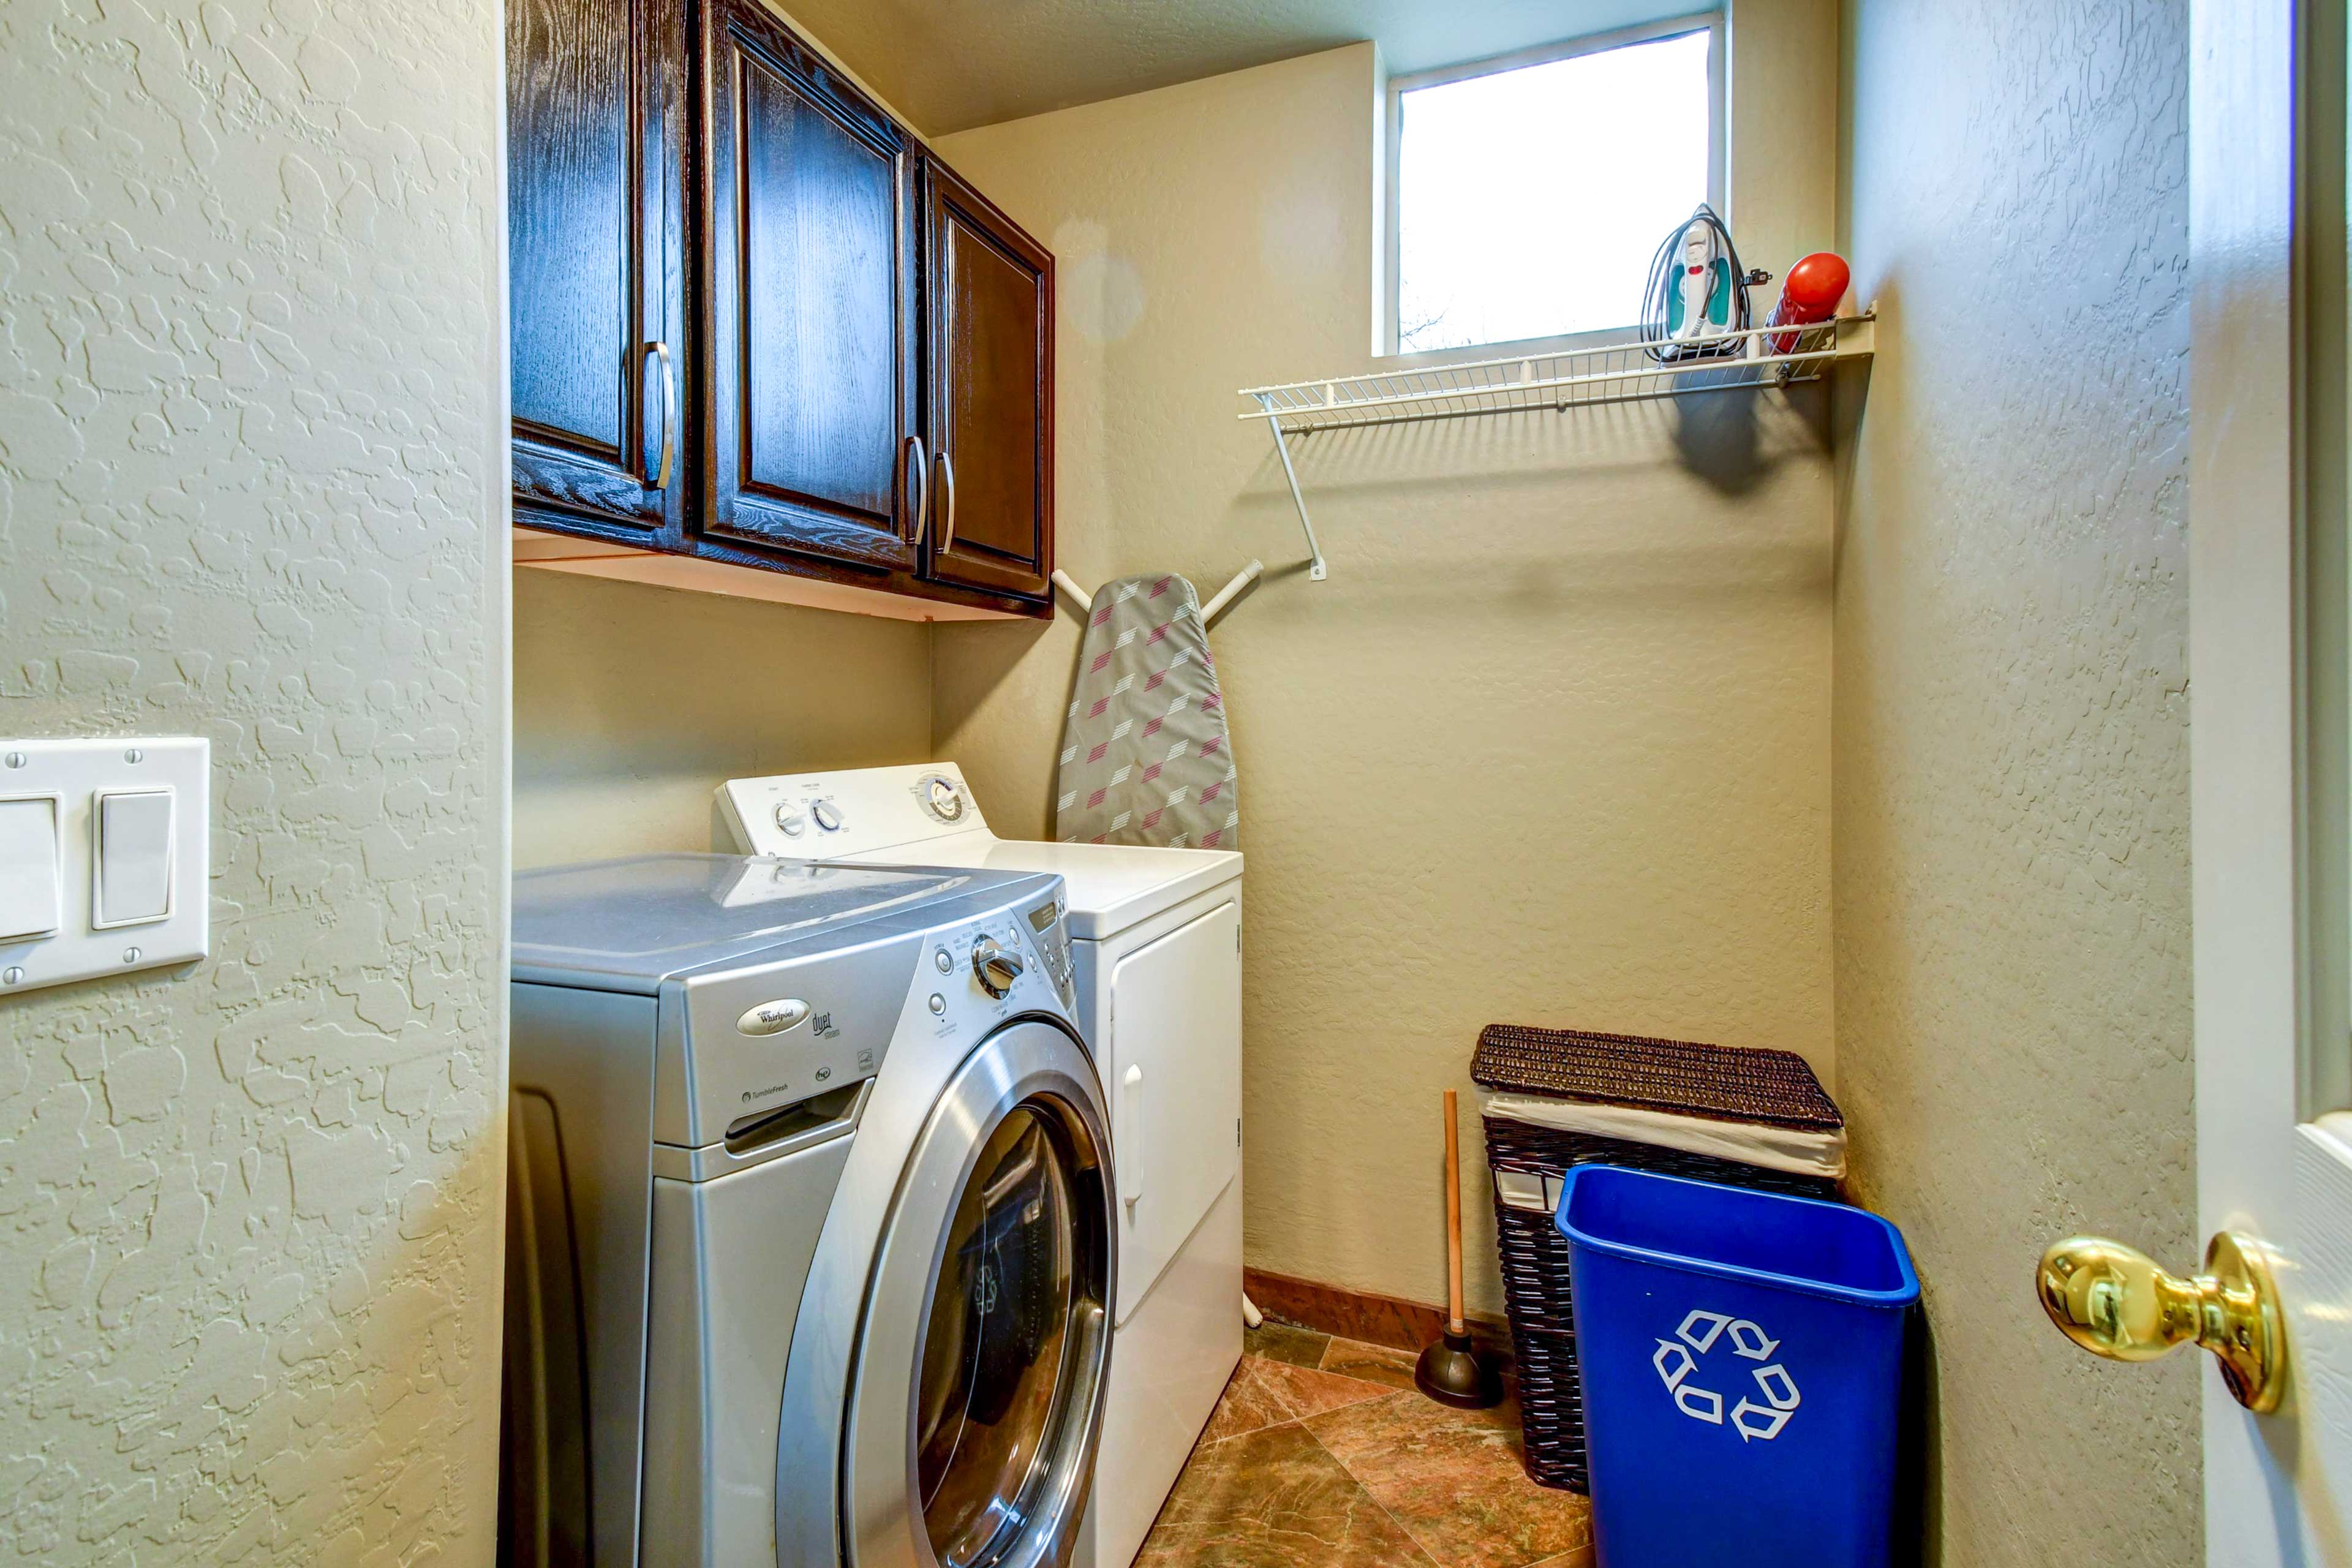 Washer & Dryer | Iron & Board | Laundry Detergent